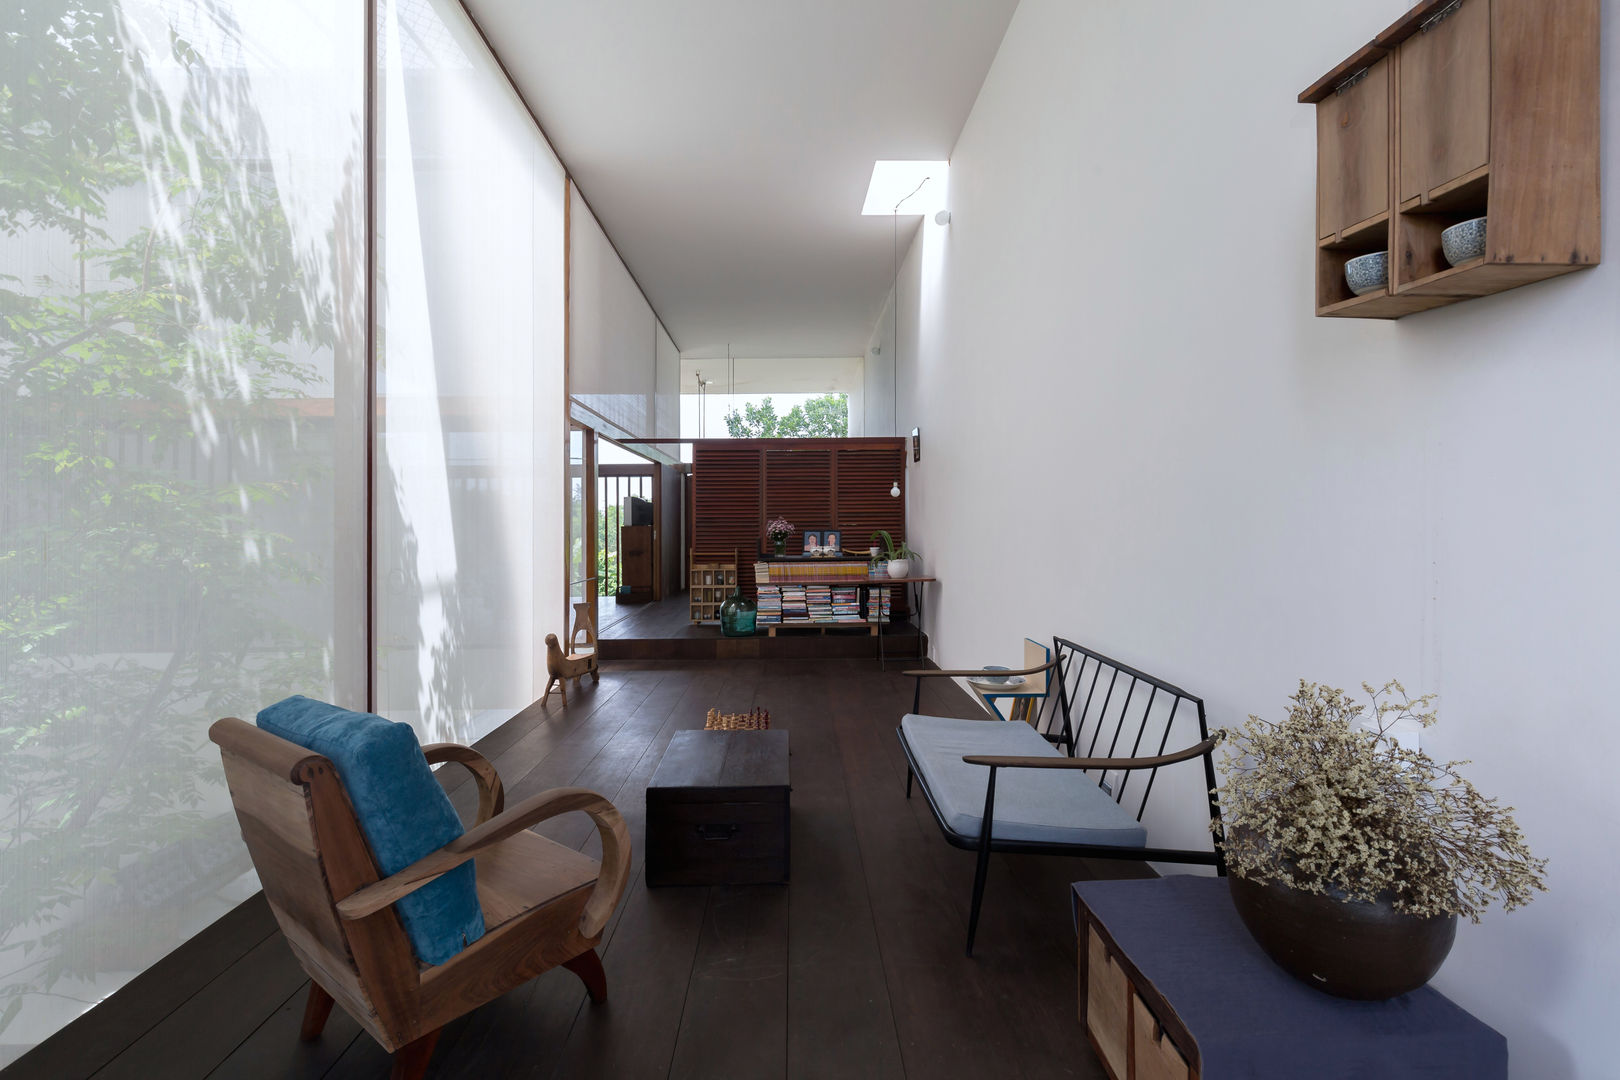 MA HOUSE, GERIRA ARCHITECTS GERIRA ARCHITECTS Livings de estilo minimalista